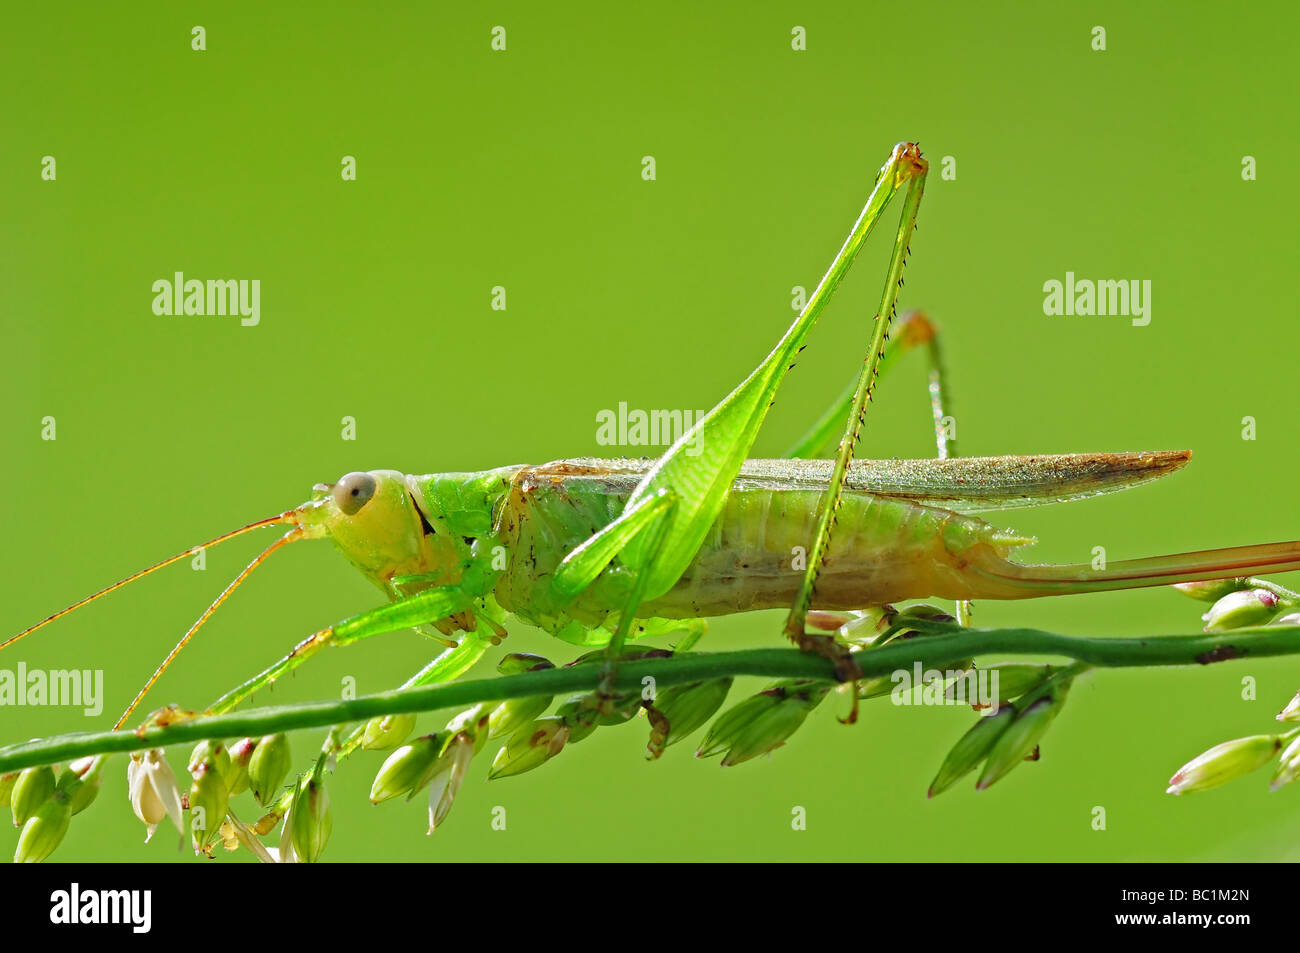 Grasshopper in the parks Stock Photo